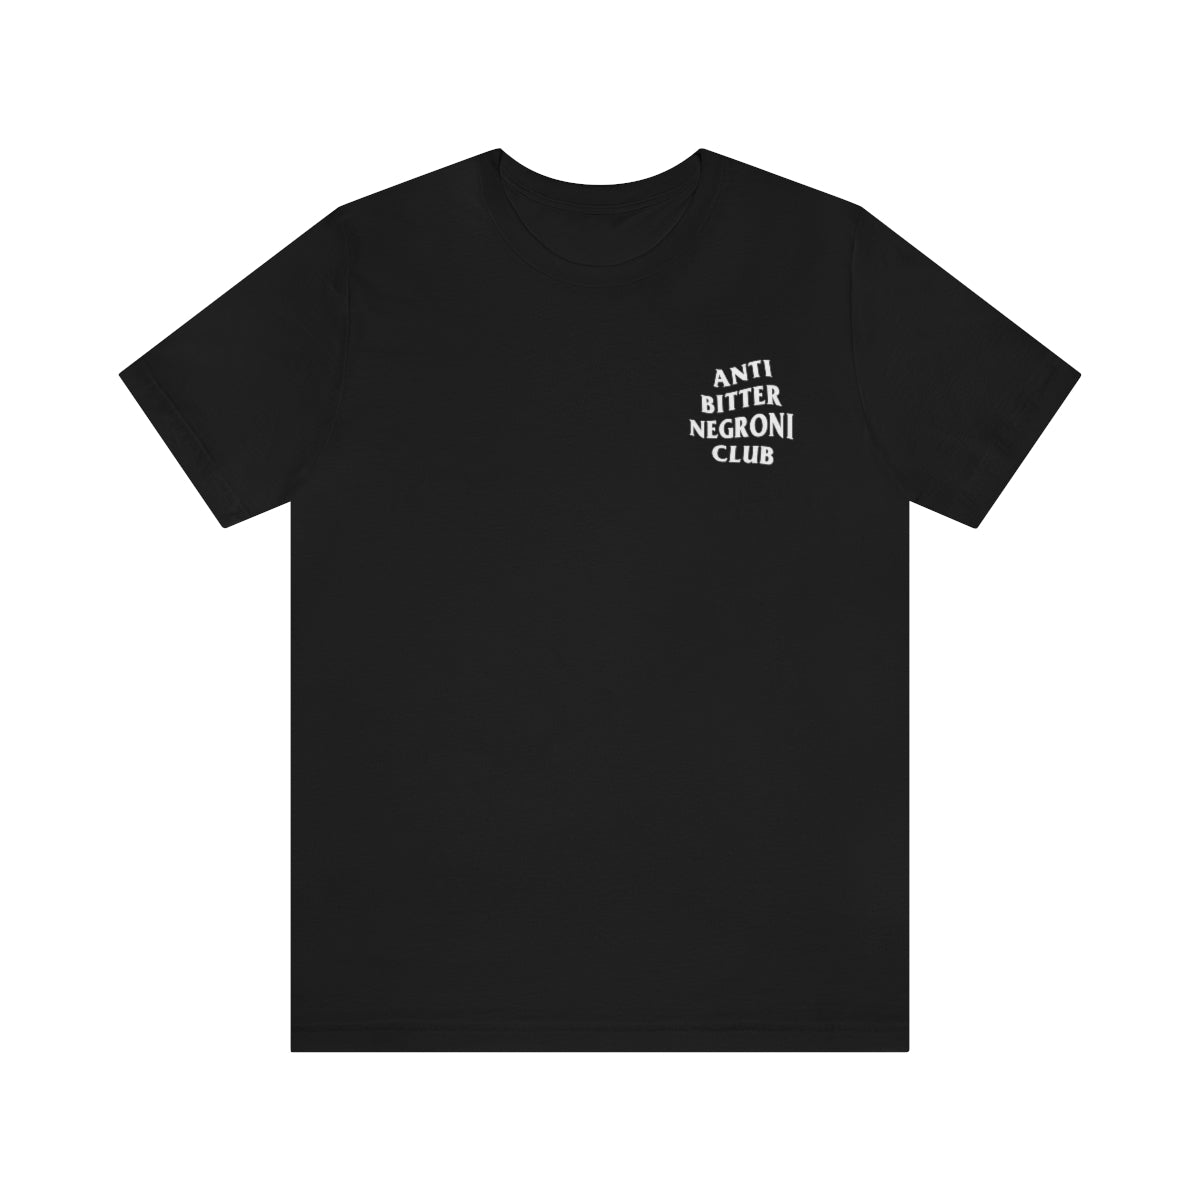 Anti Bitter Negroni Club Unisex T-Shirt